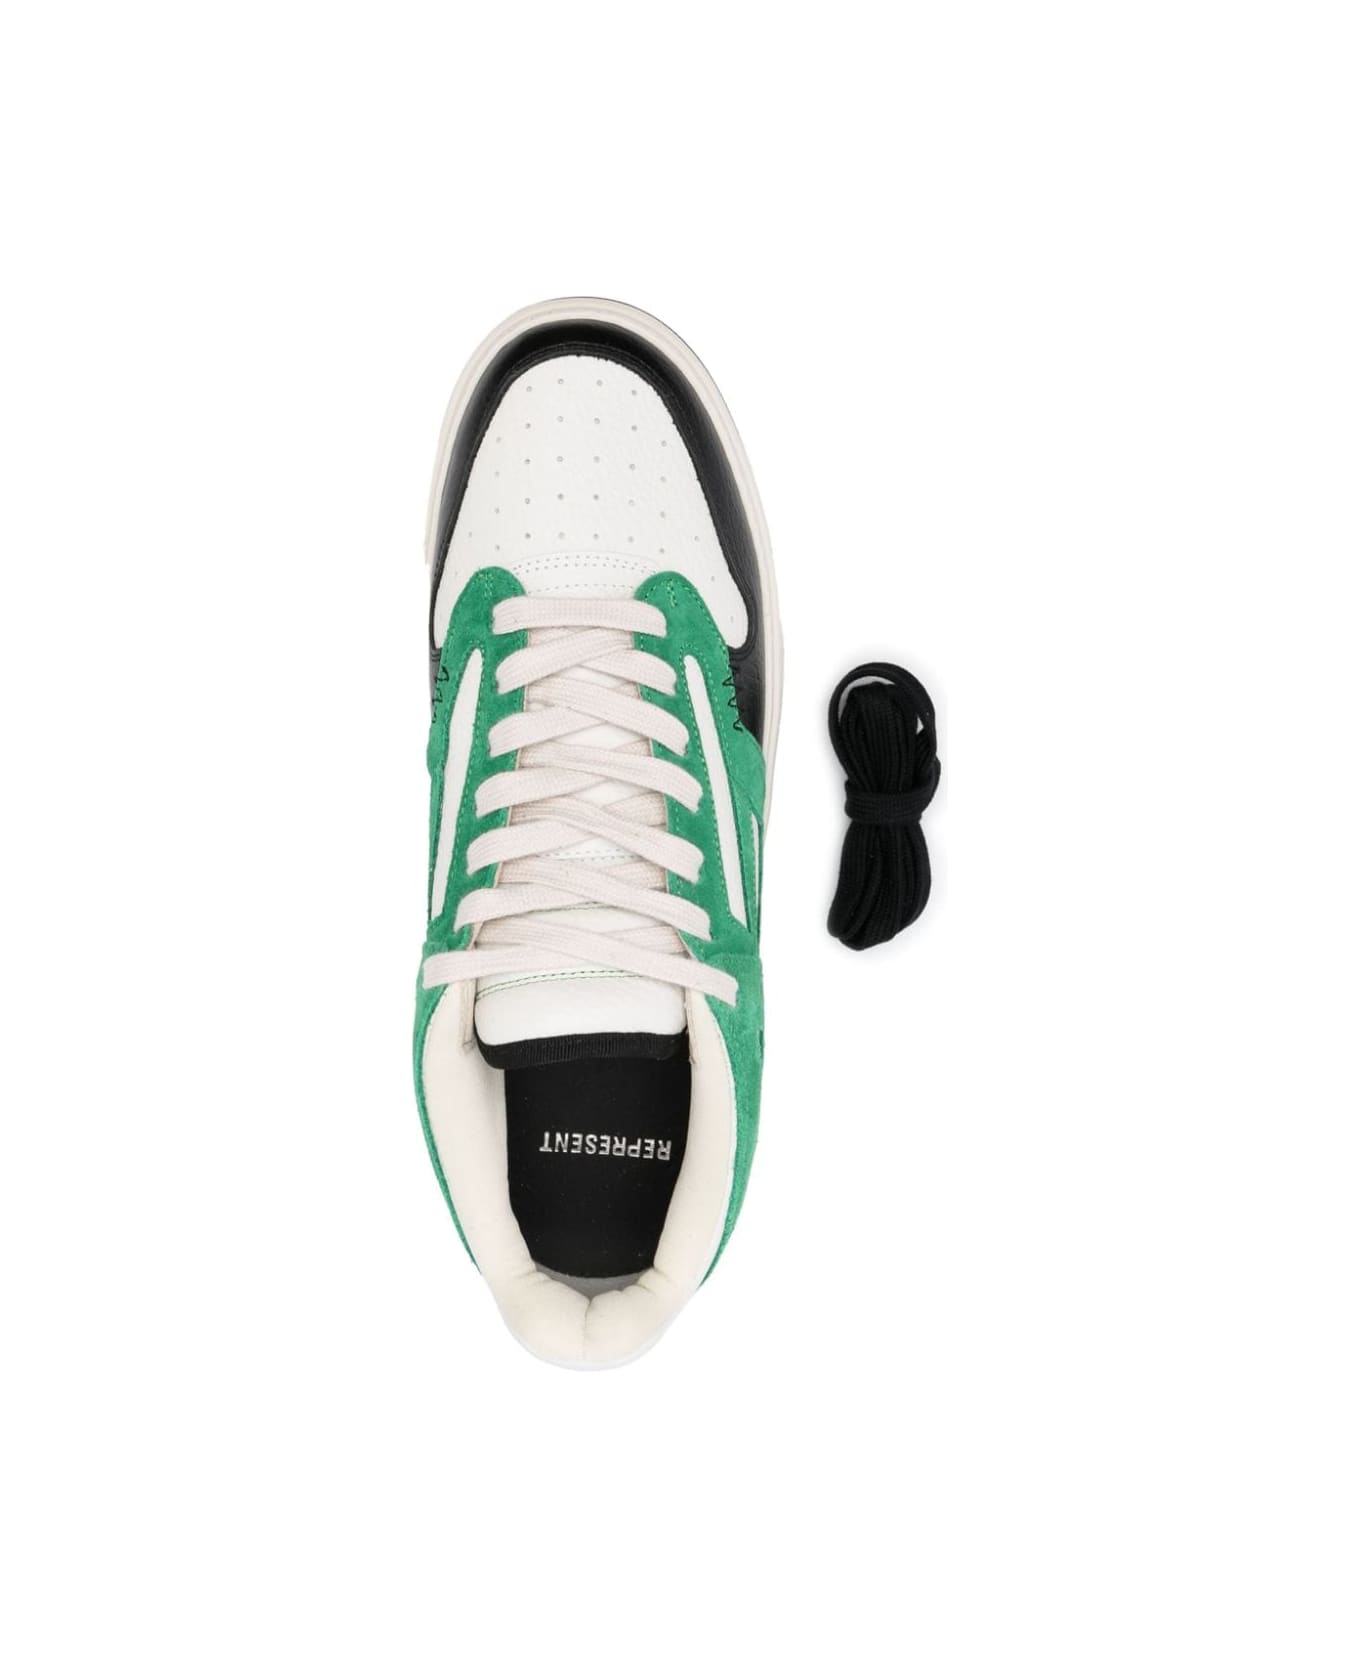 REPRESENT Reptor Sneakers - Island Green Vintage White Black